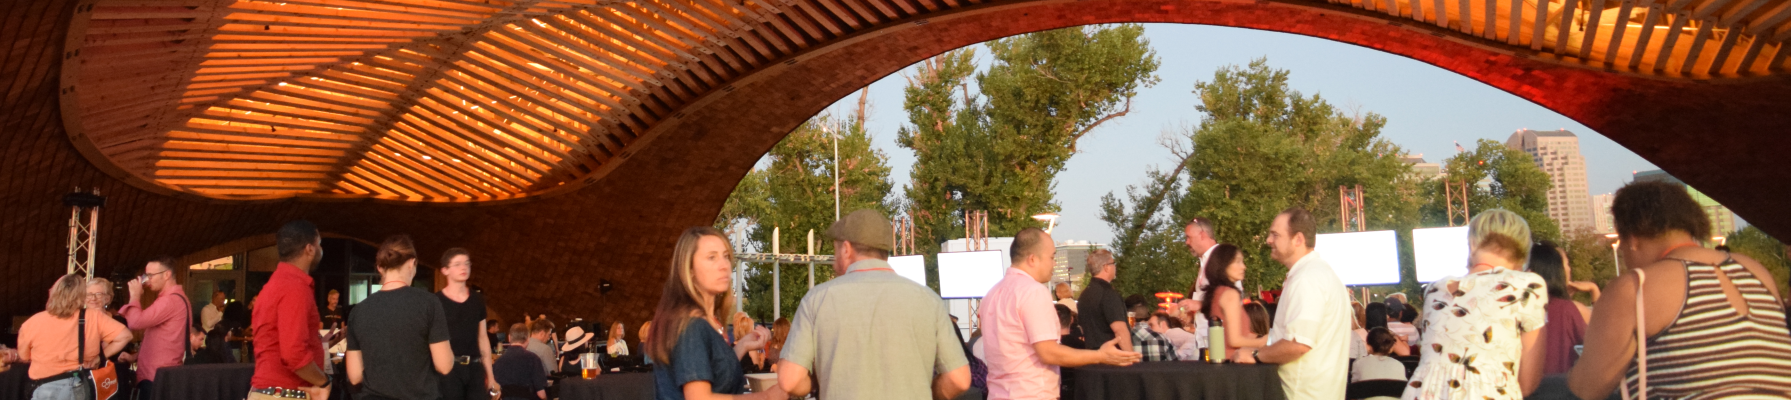 Tedx在谷仓演讲，居民们站在拱门下